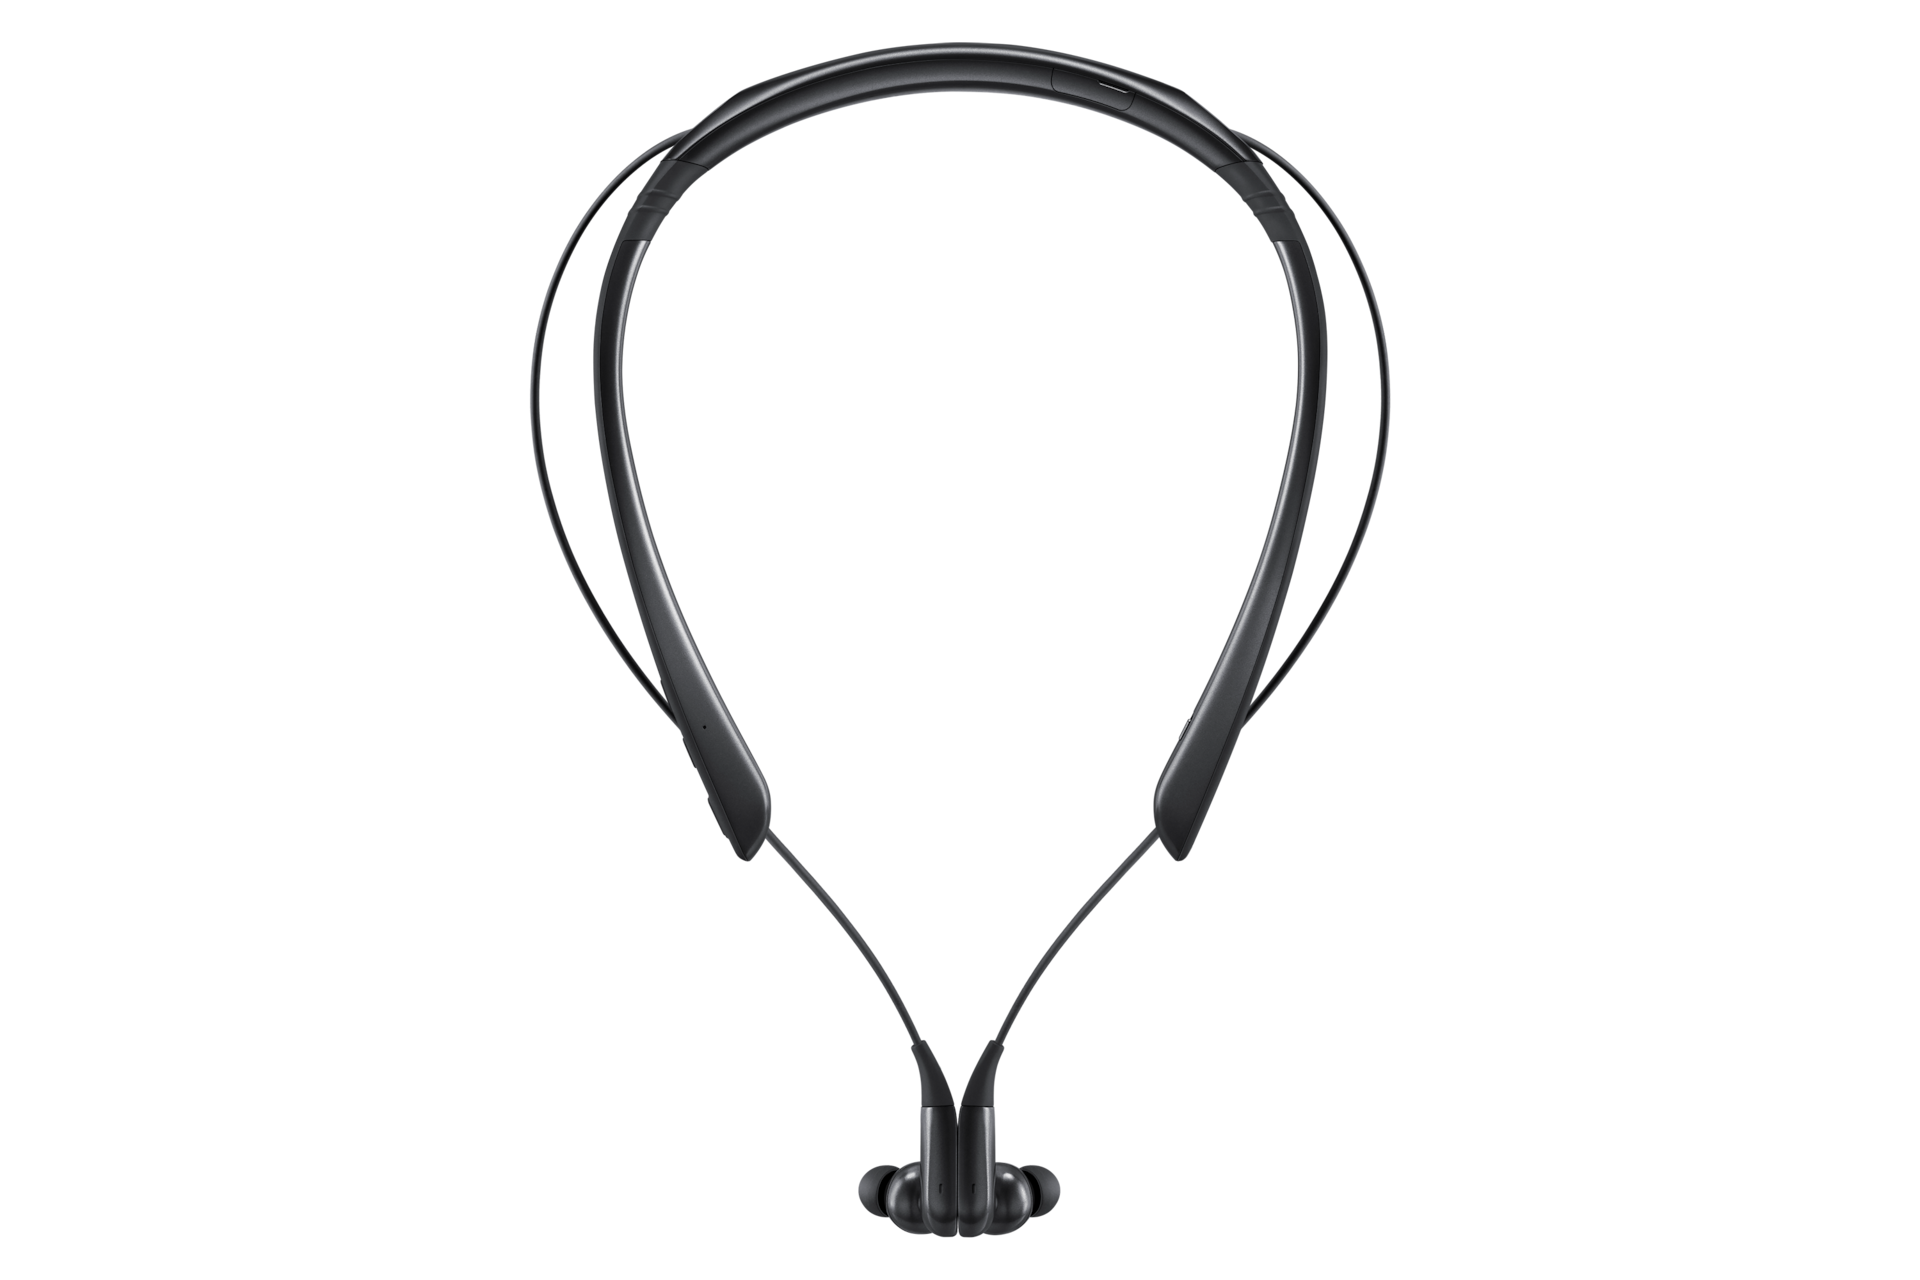 level u pro noise cancelling bluetooth neckband earphones